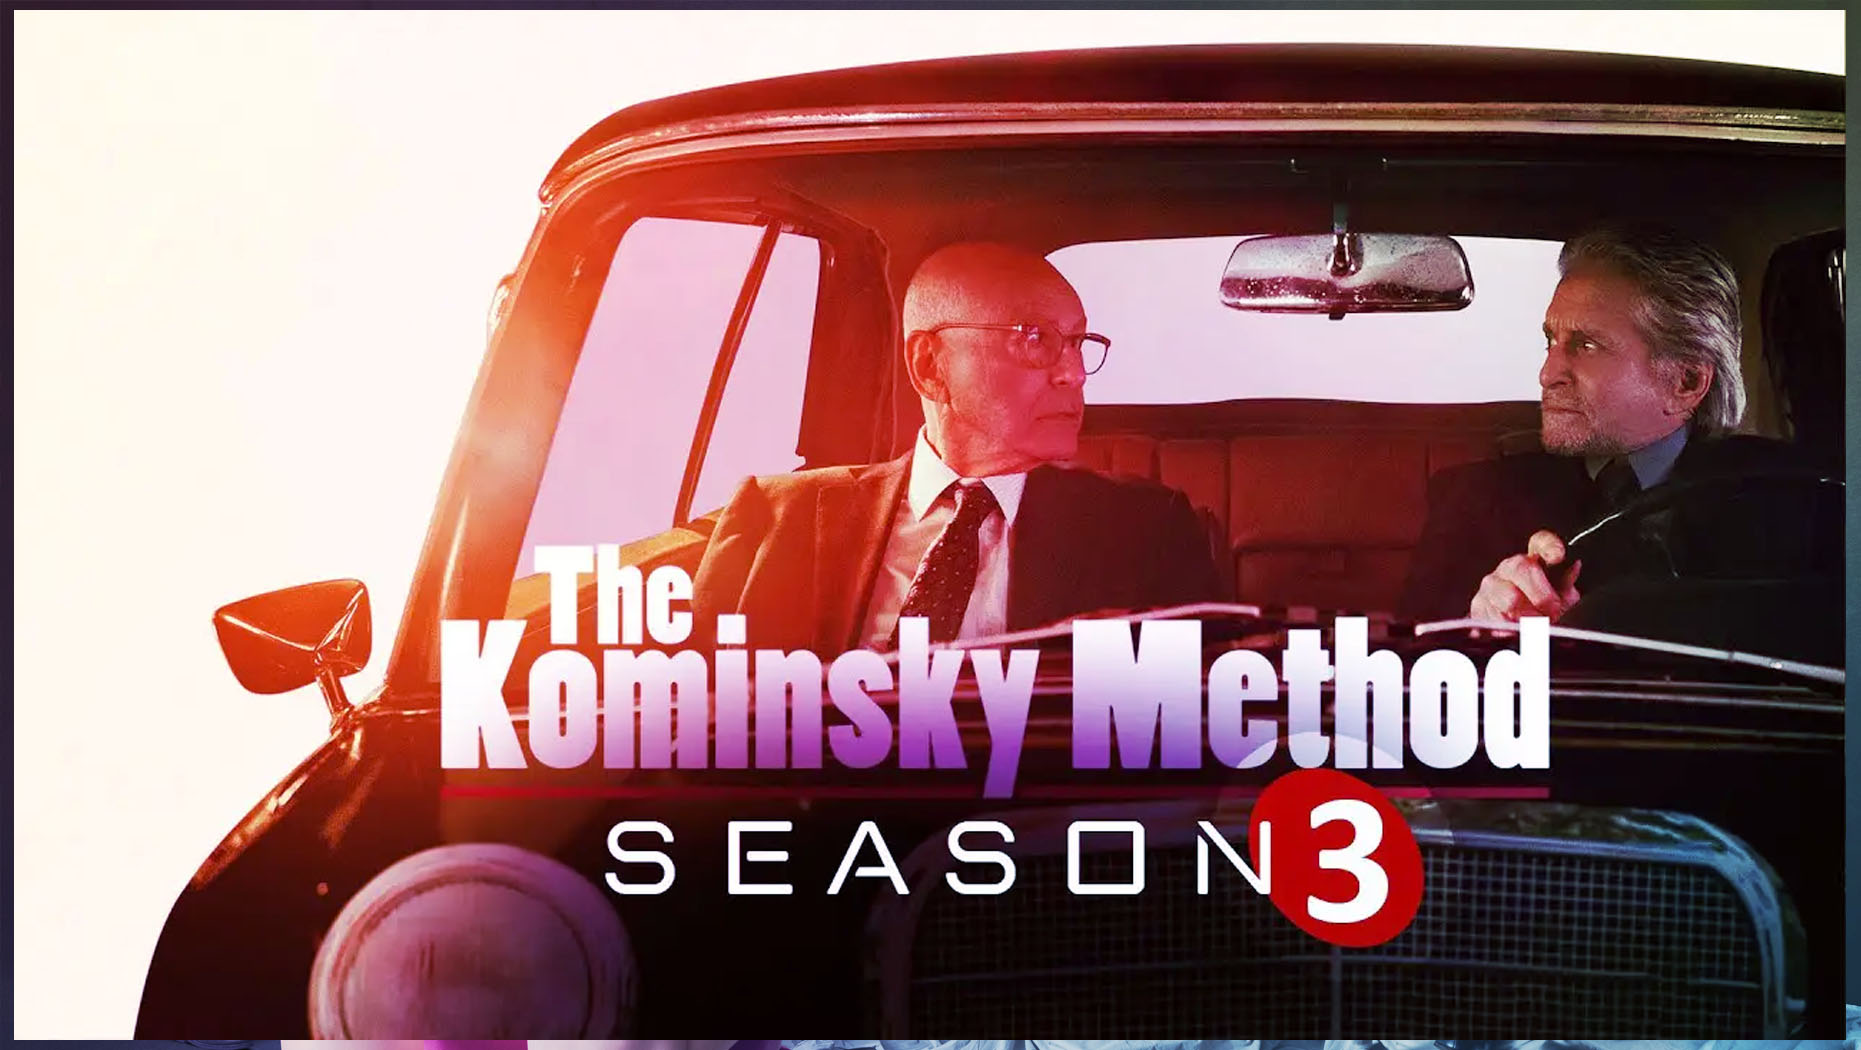 The Kominsky Method Season 3